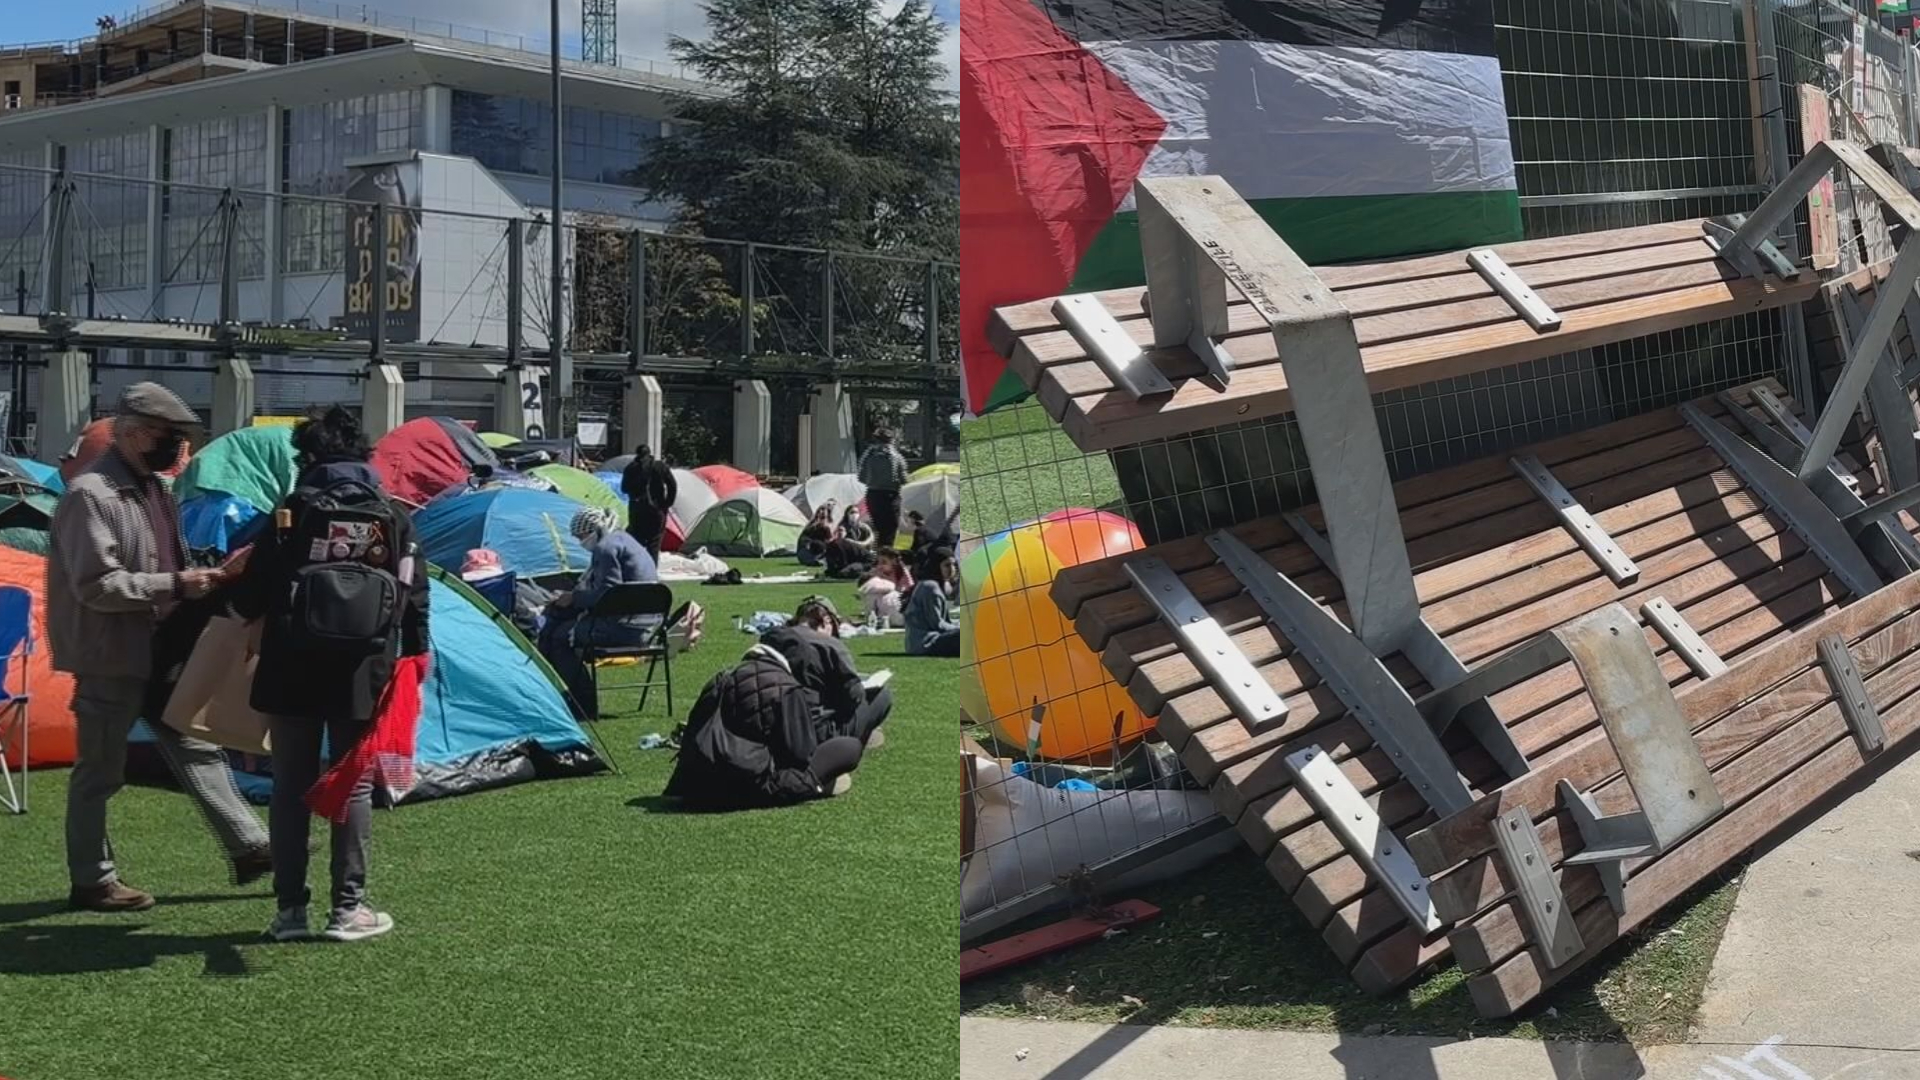 Pro-Palestinian encampment at UBC grows